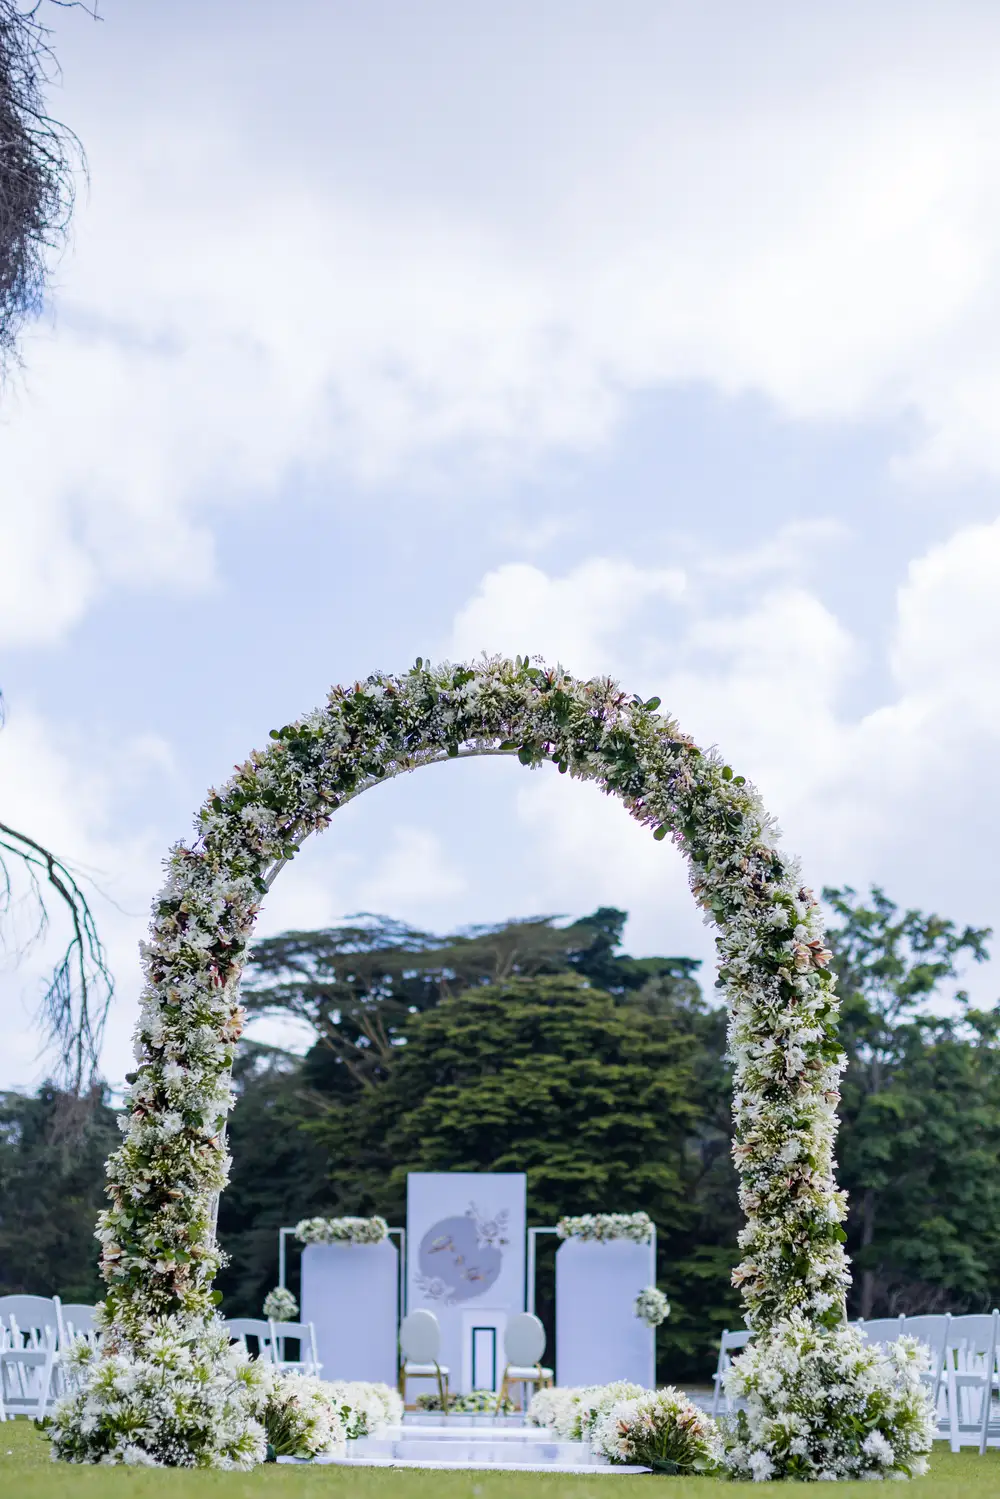 Wedding flower Arc on a park